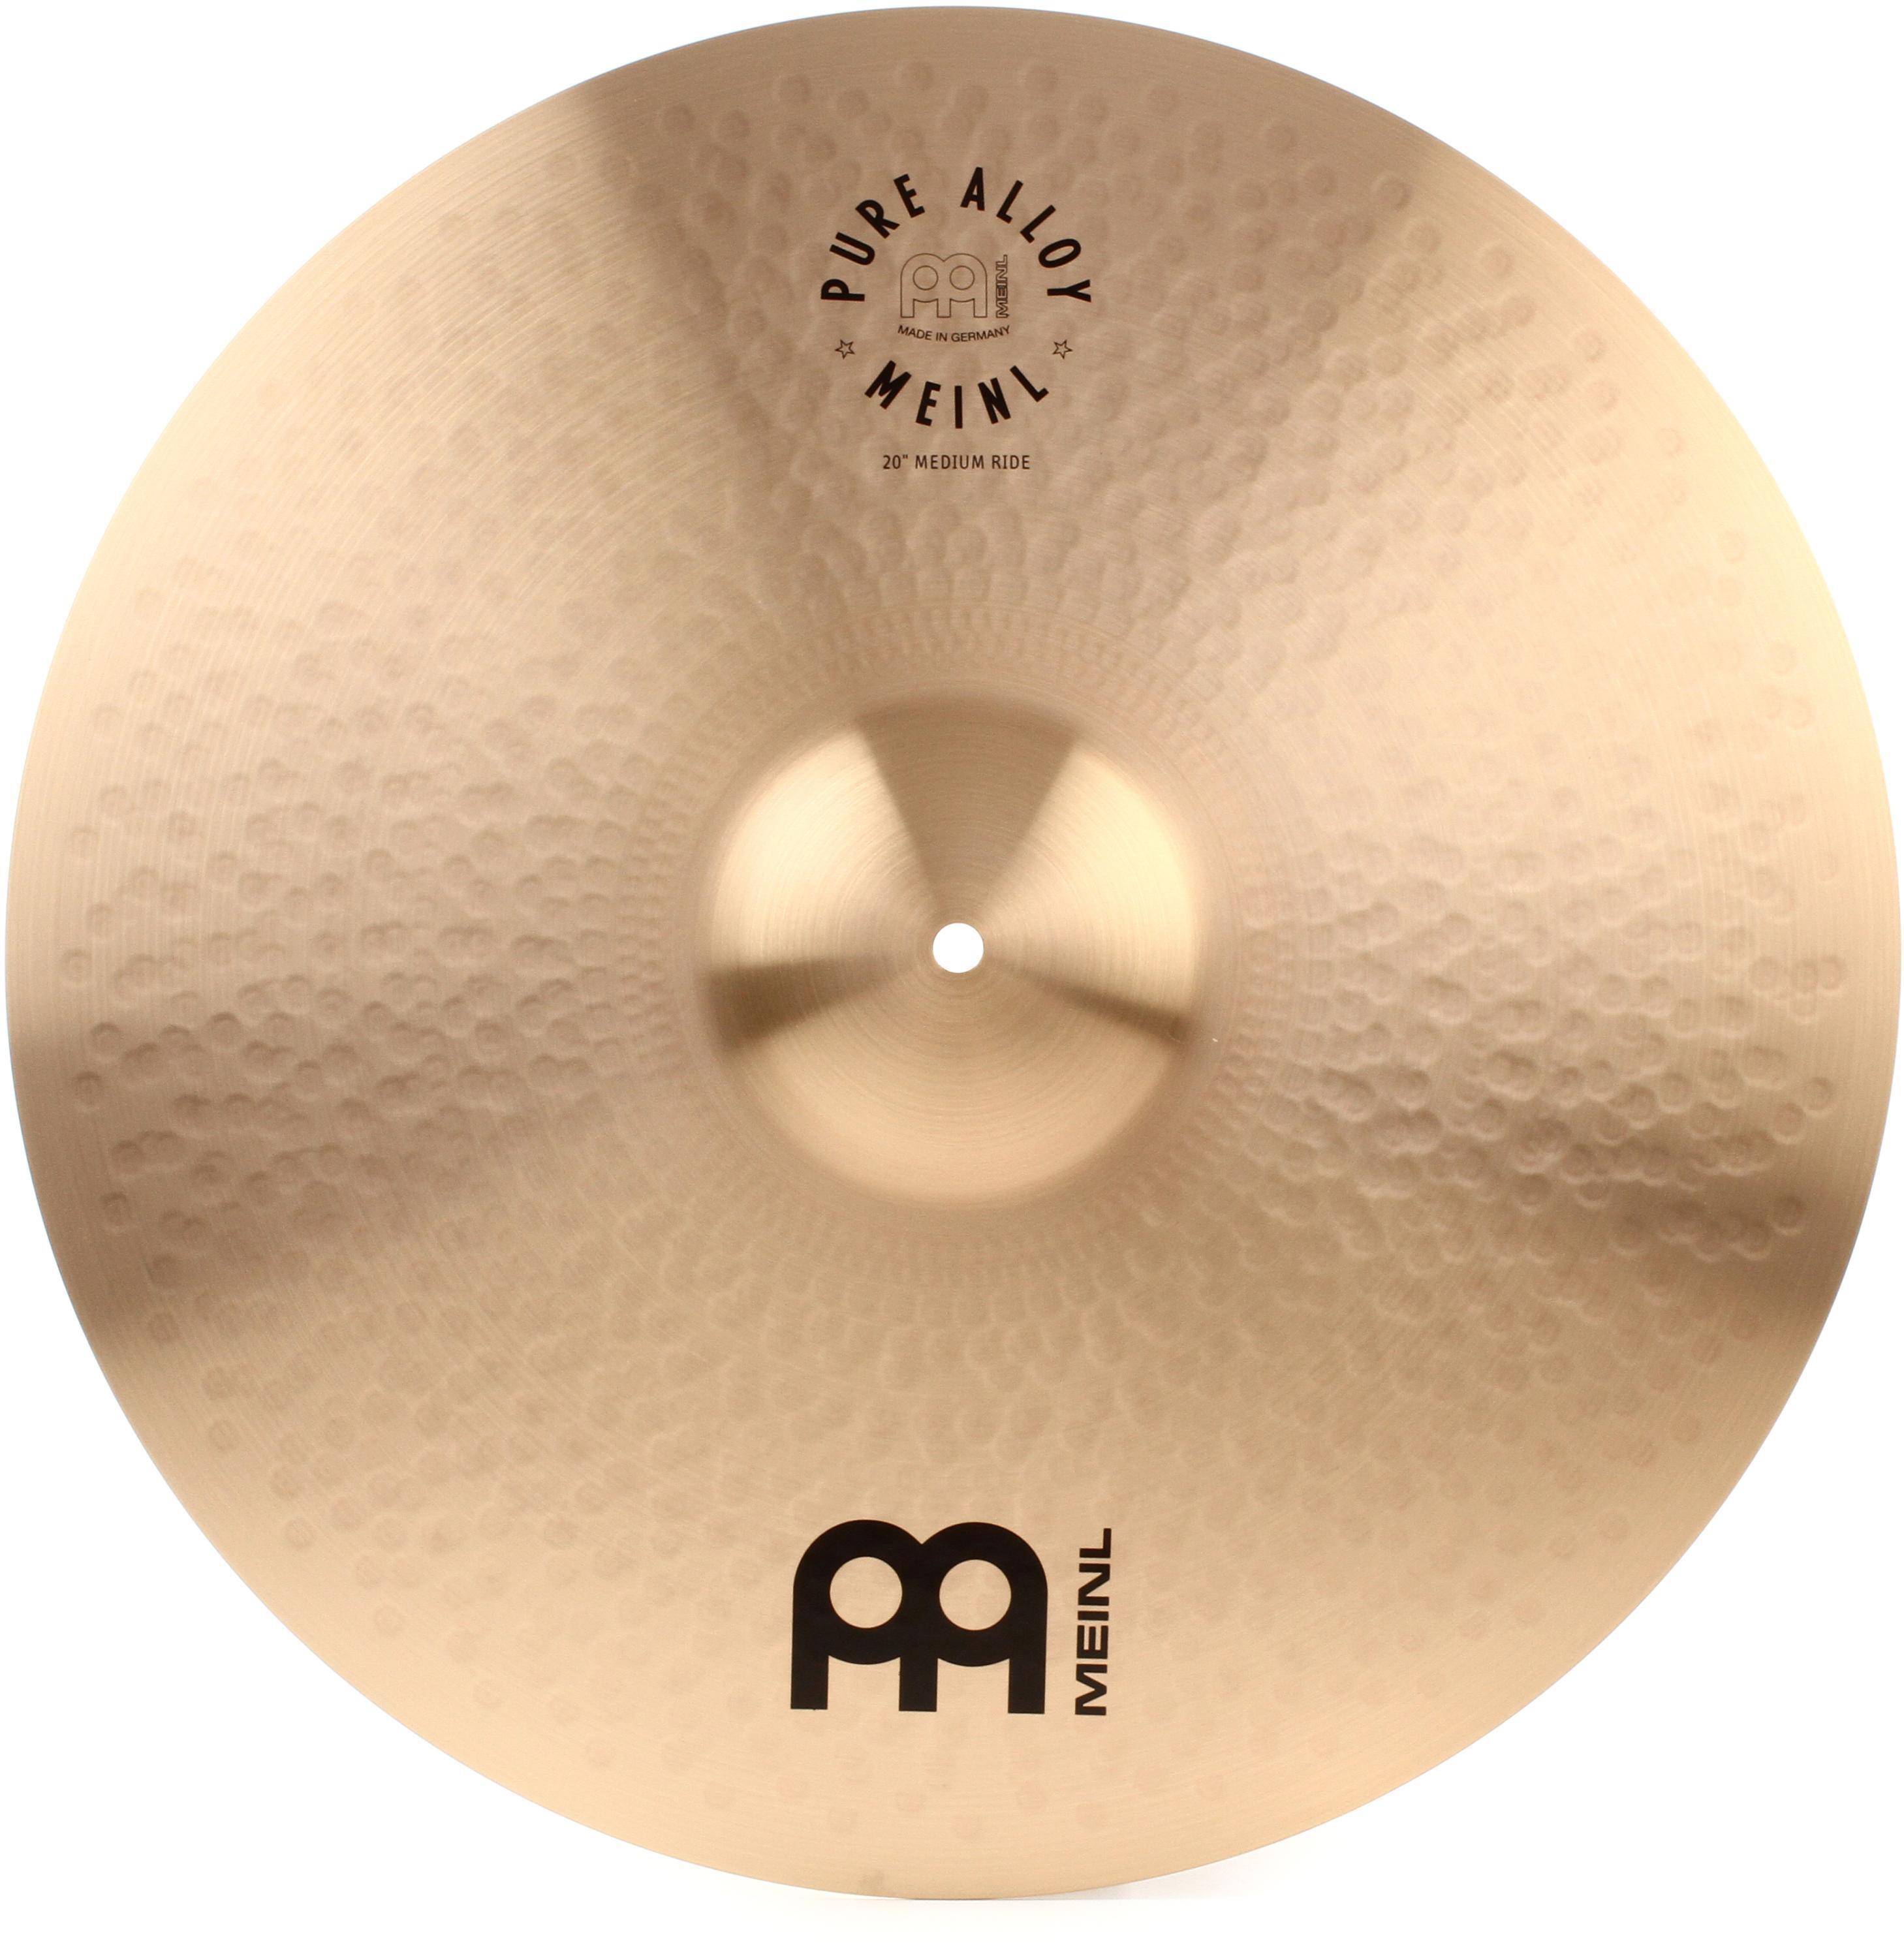 Meinl Cymbals Pure Alloy Ride Cymbal - 20 inch, Medium